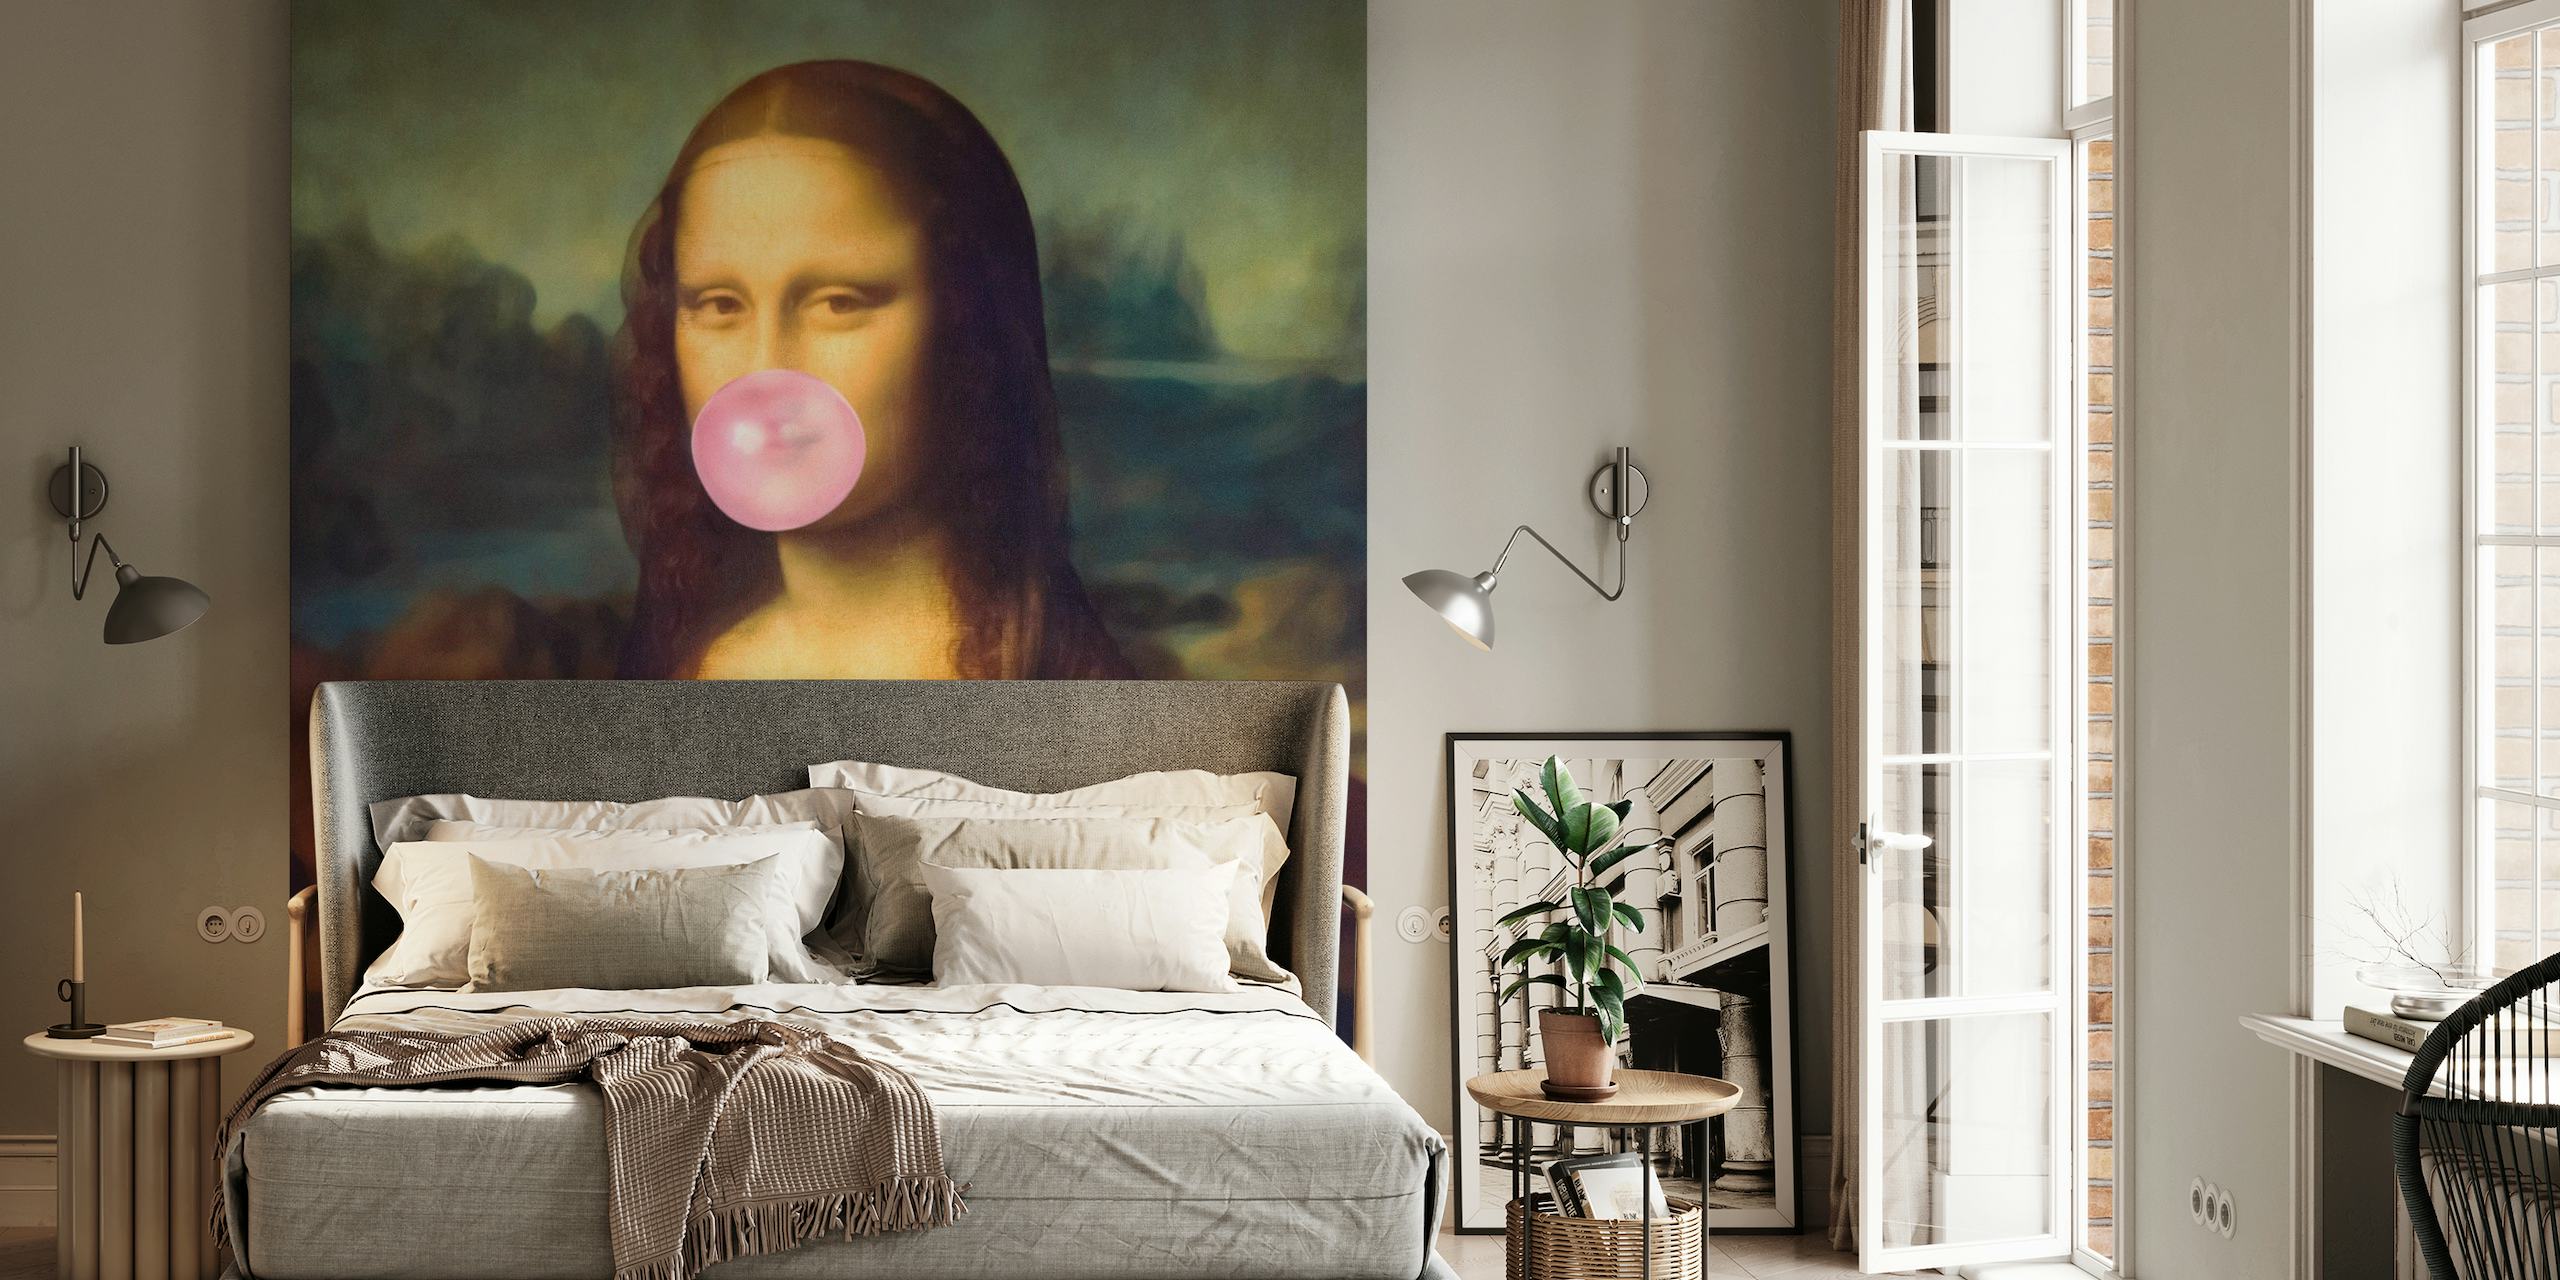 Sassy Mona Lisa wallpaper